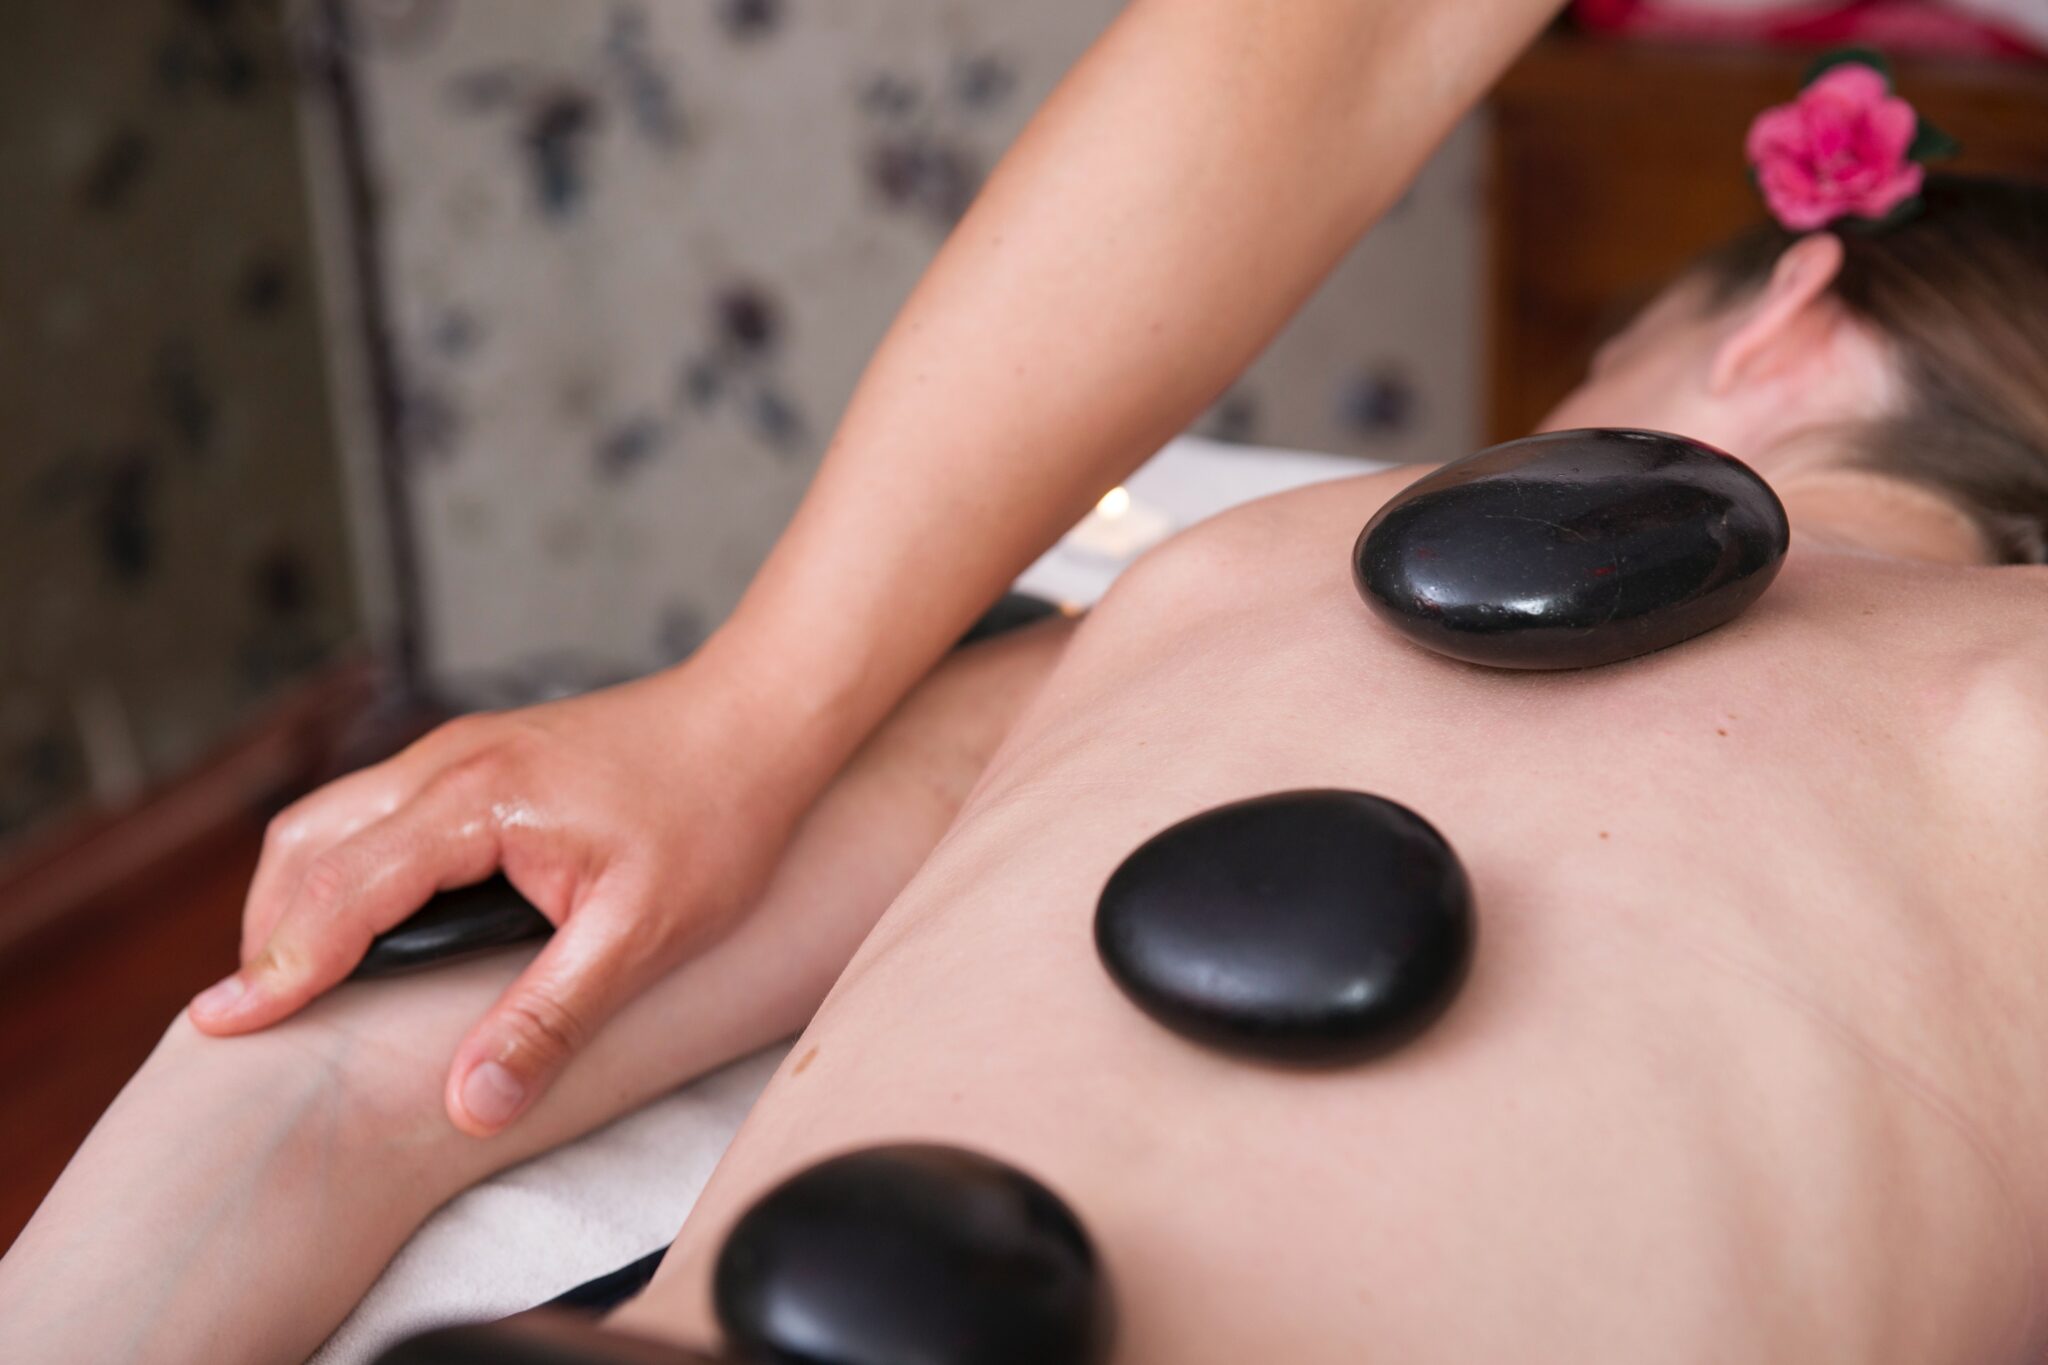 The Benefits of Hot Stone Massage